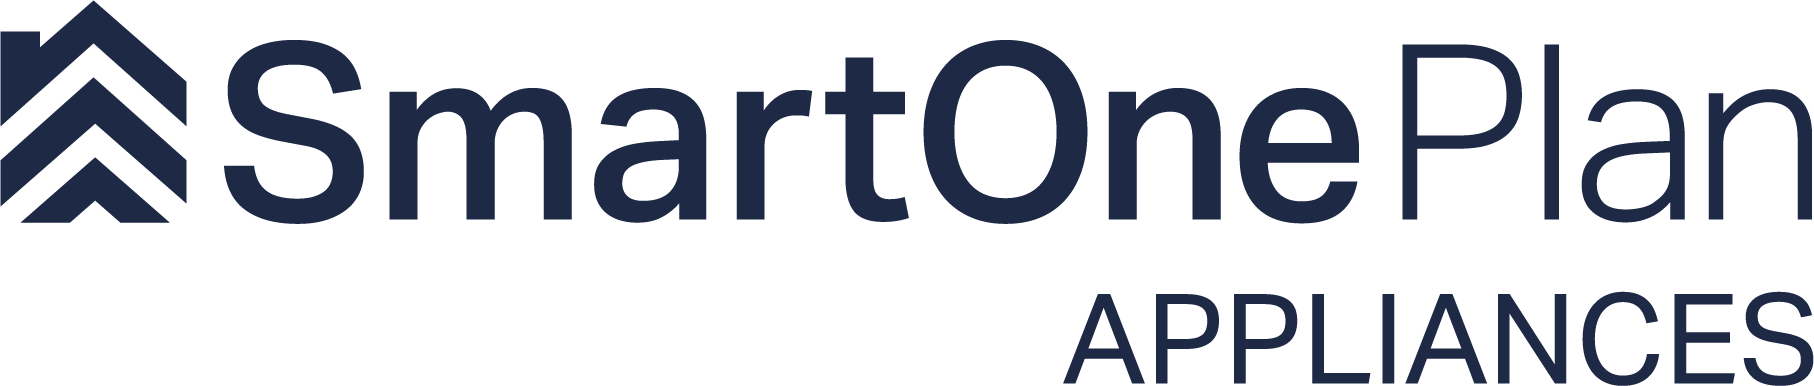 SmartOne Plan Appliances Logo